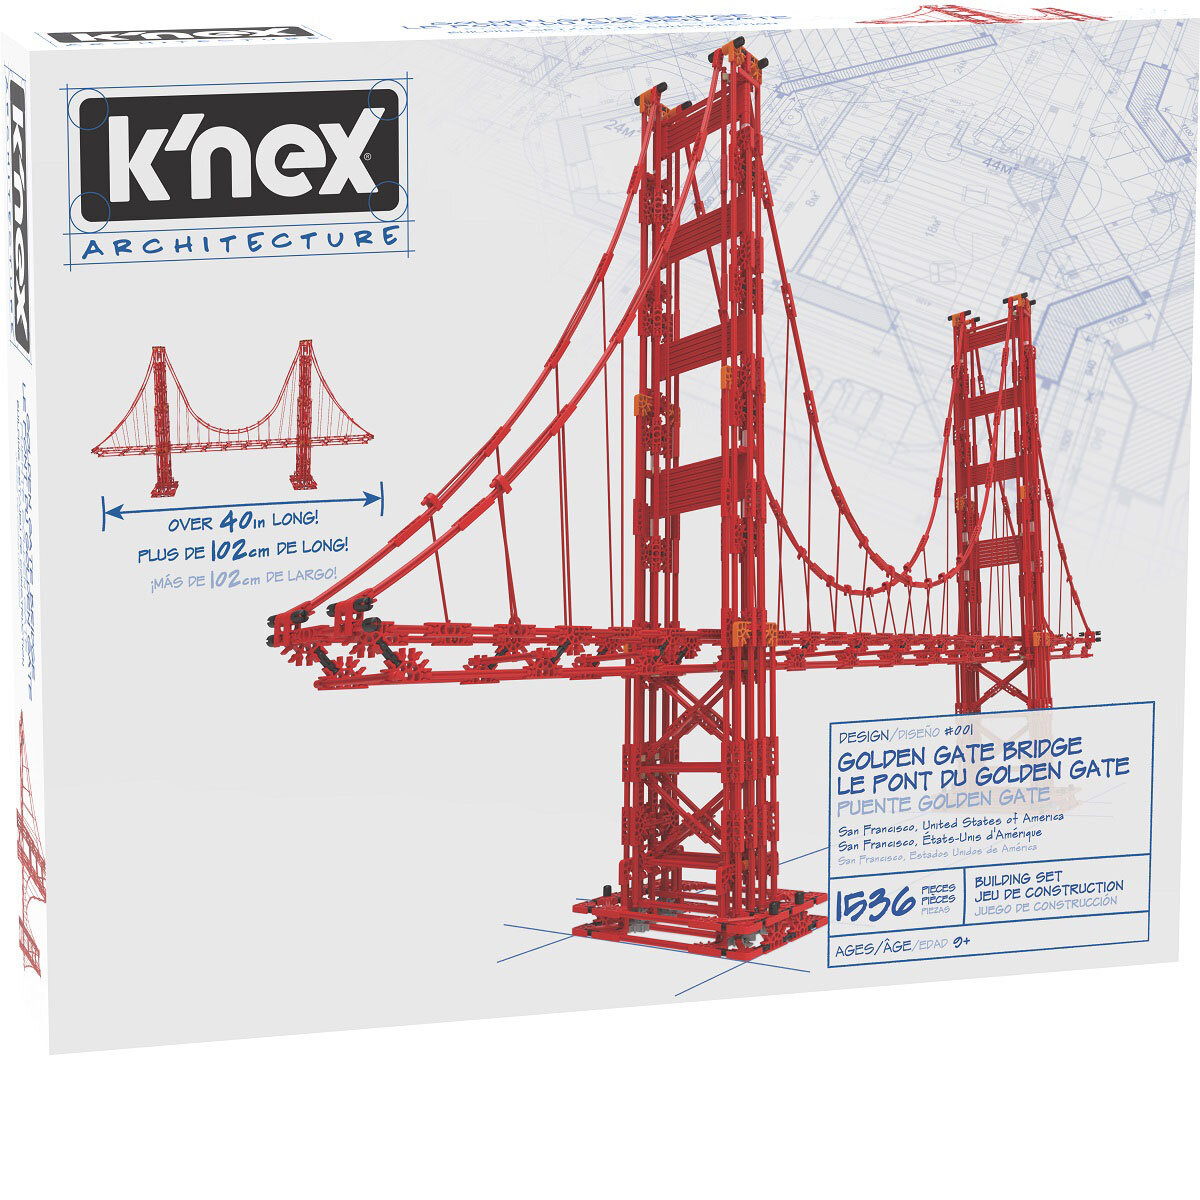 Buy K'nex Golden Gate Bridge Box Image at Costco.co.uk